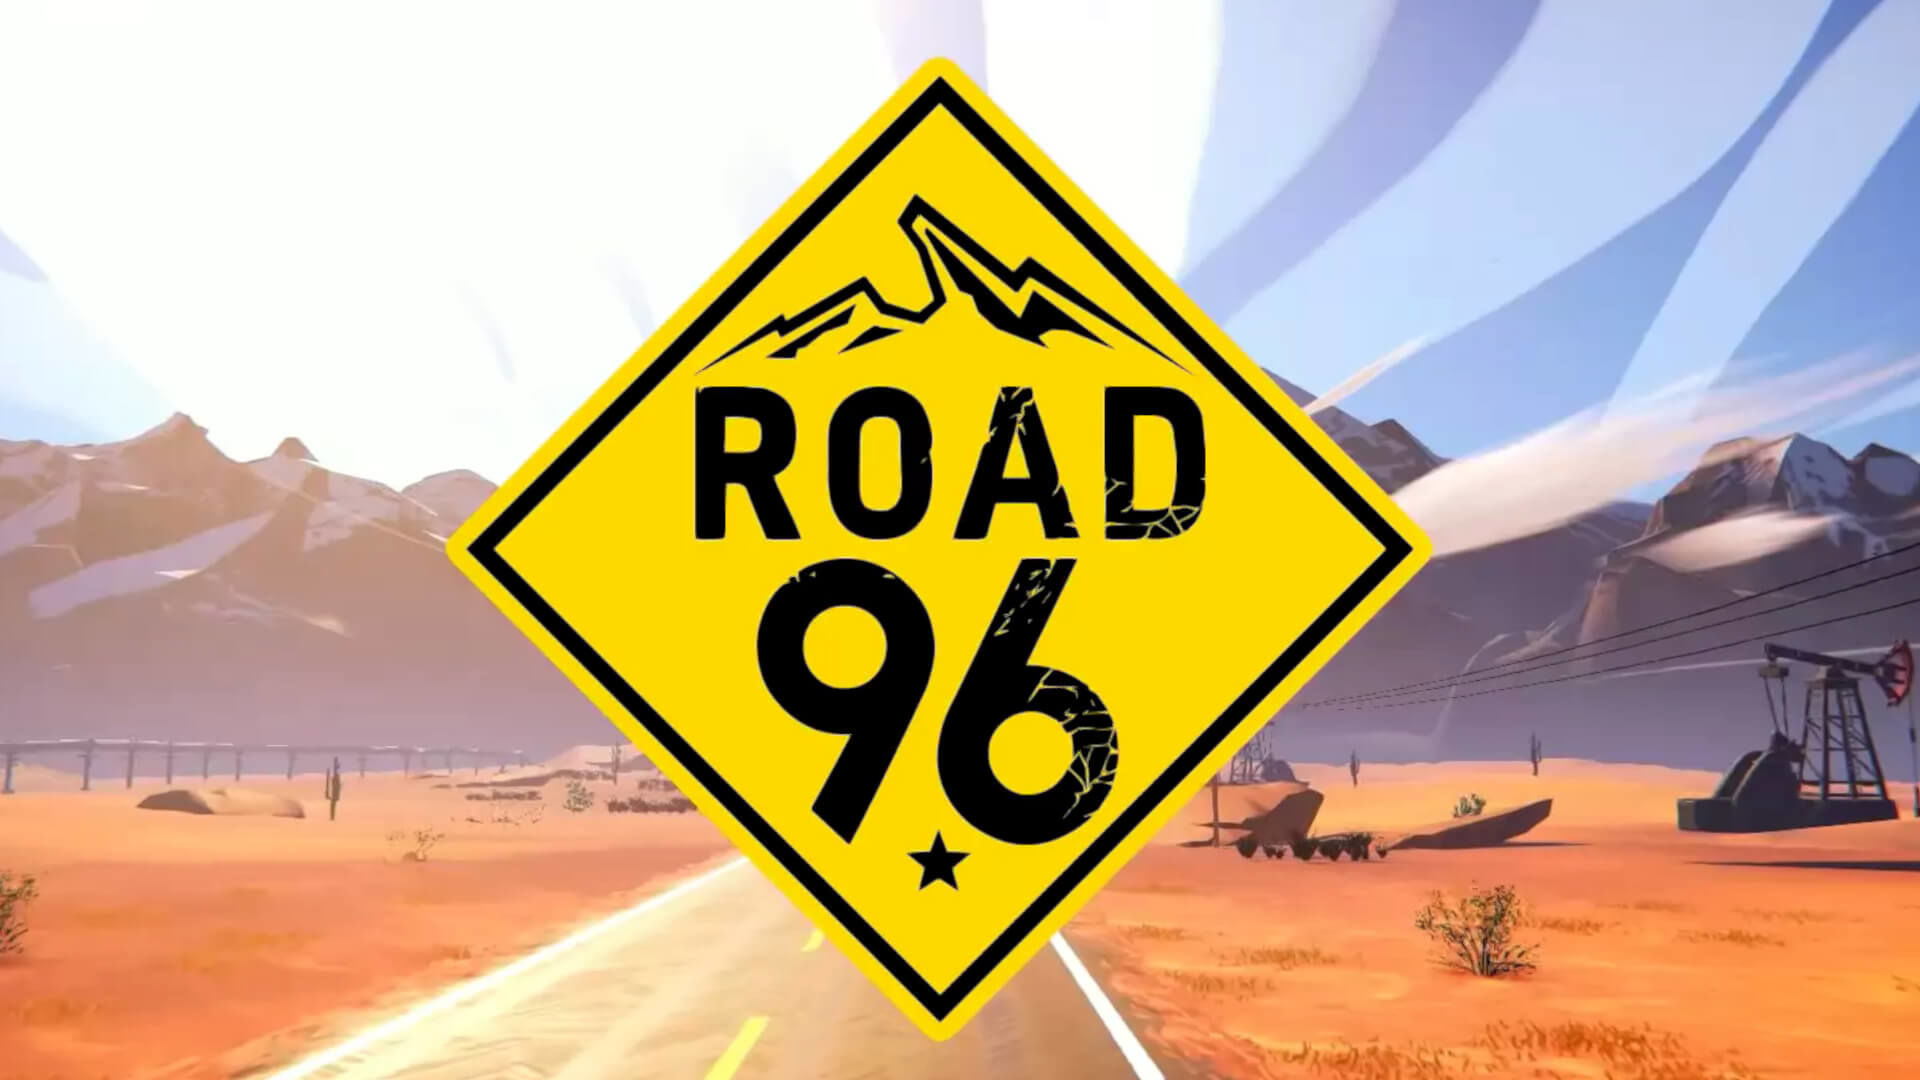 Road-96